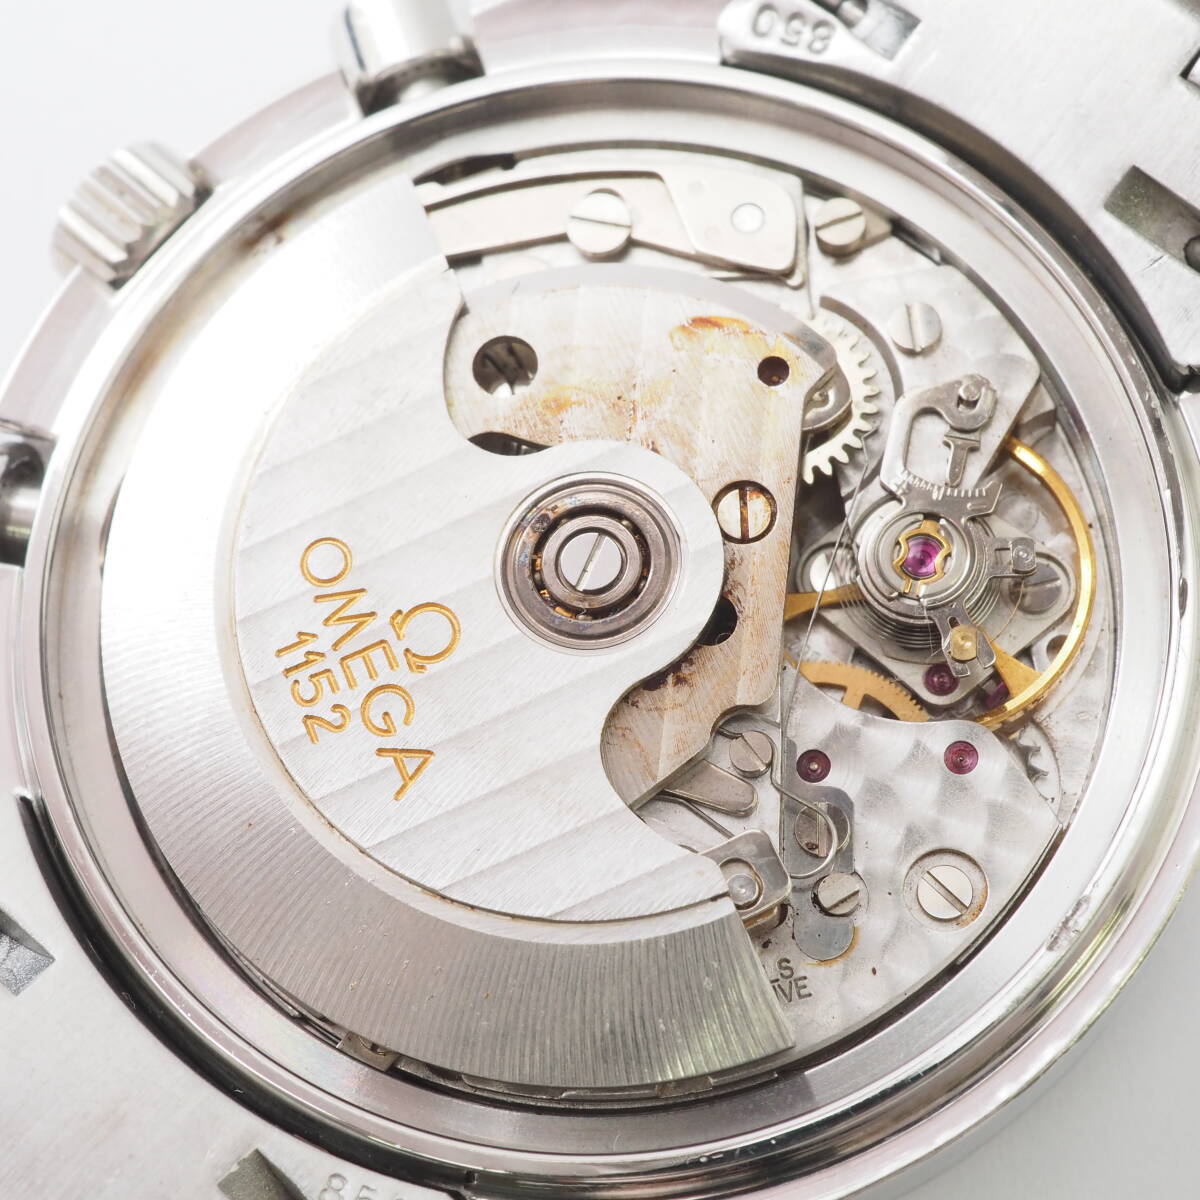  Omega Speedmaster Date OMEGA Speedmaster Ref,175.0083 Cal,1152 self-winding watch chronograph silver men's wristwatch [57698038-AH1